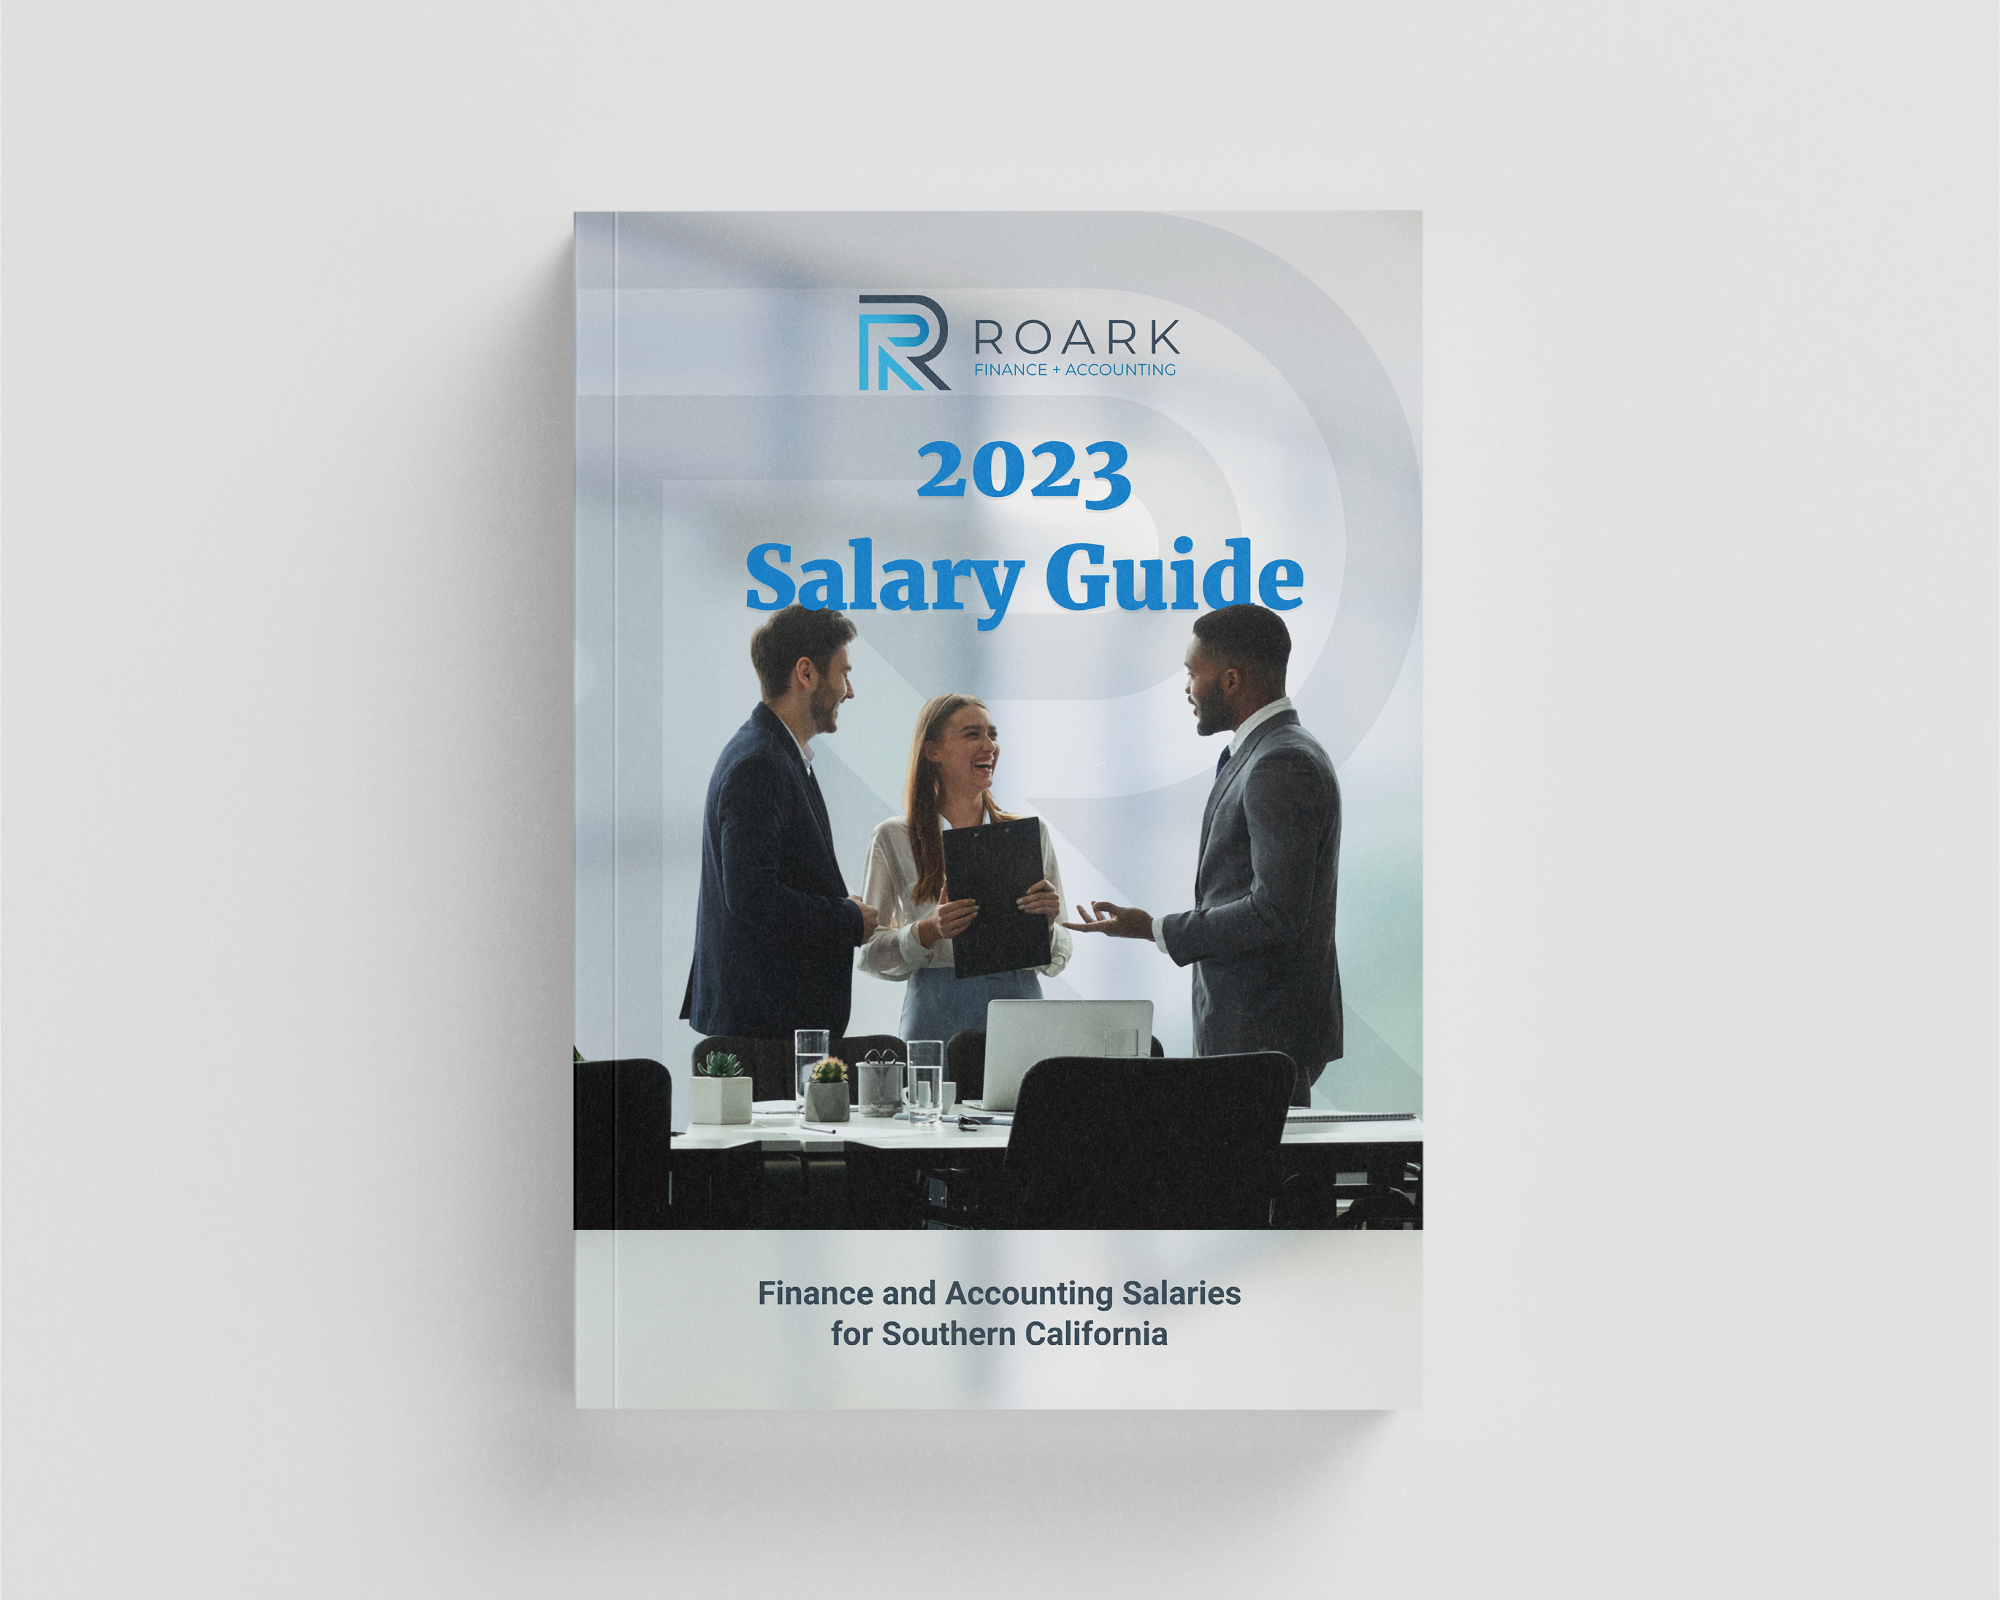 ror-salary-guide-2023-mockup-1